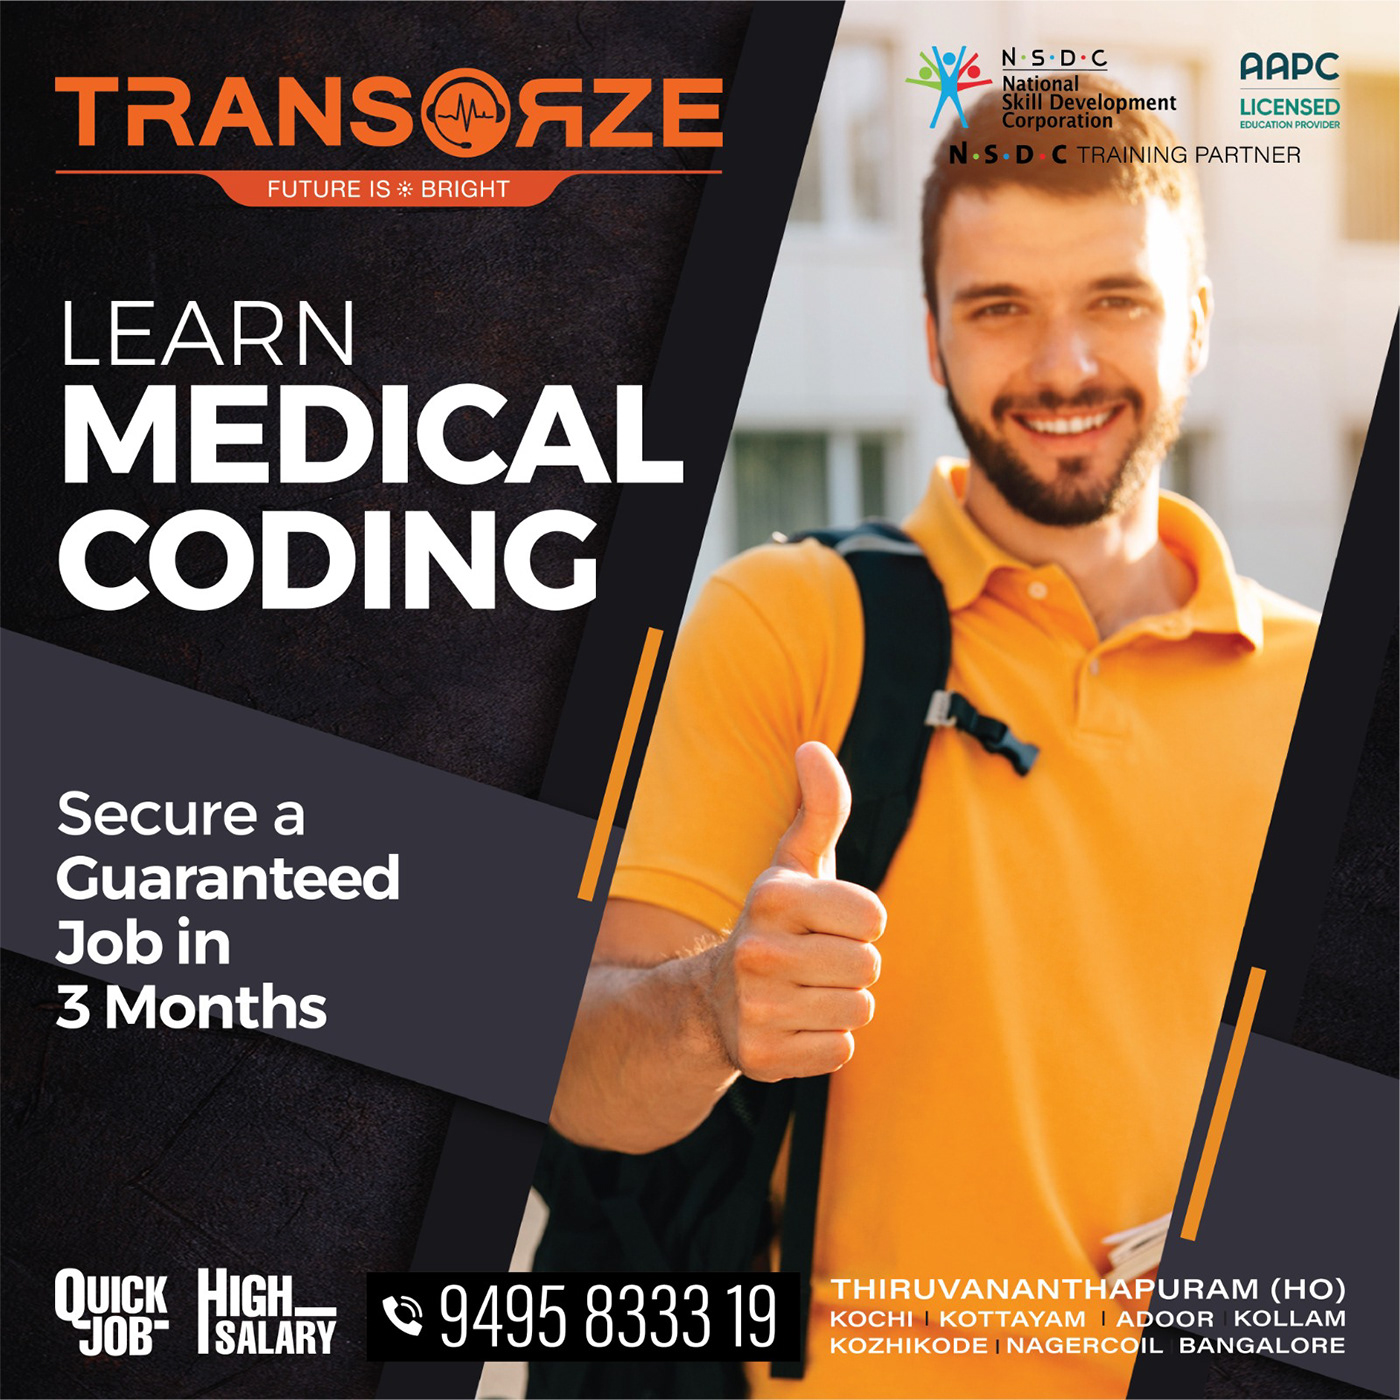 medical coding training course career job online Graduates Education learn